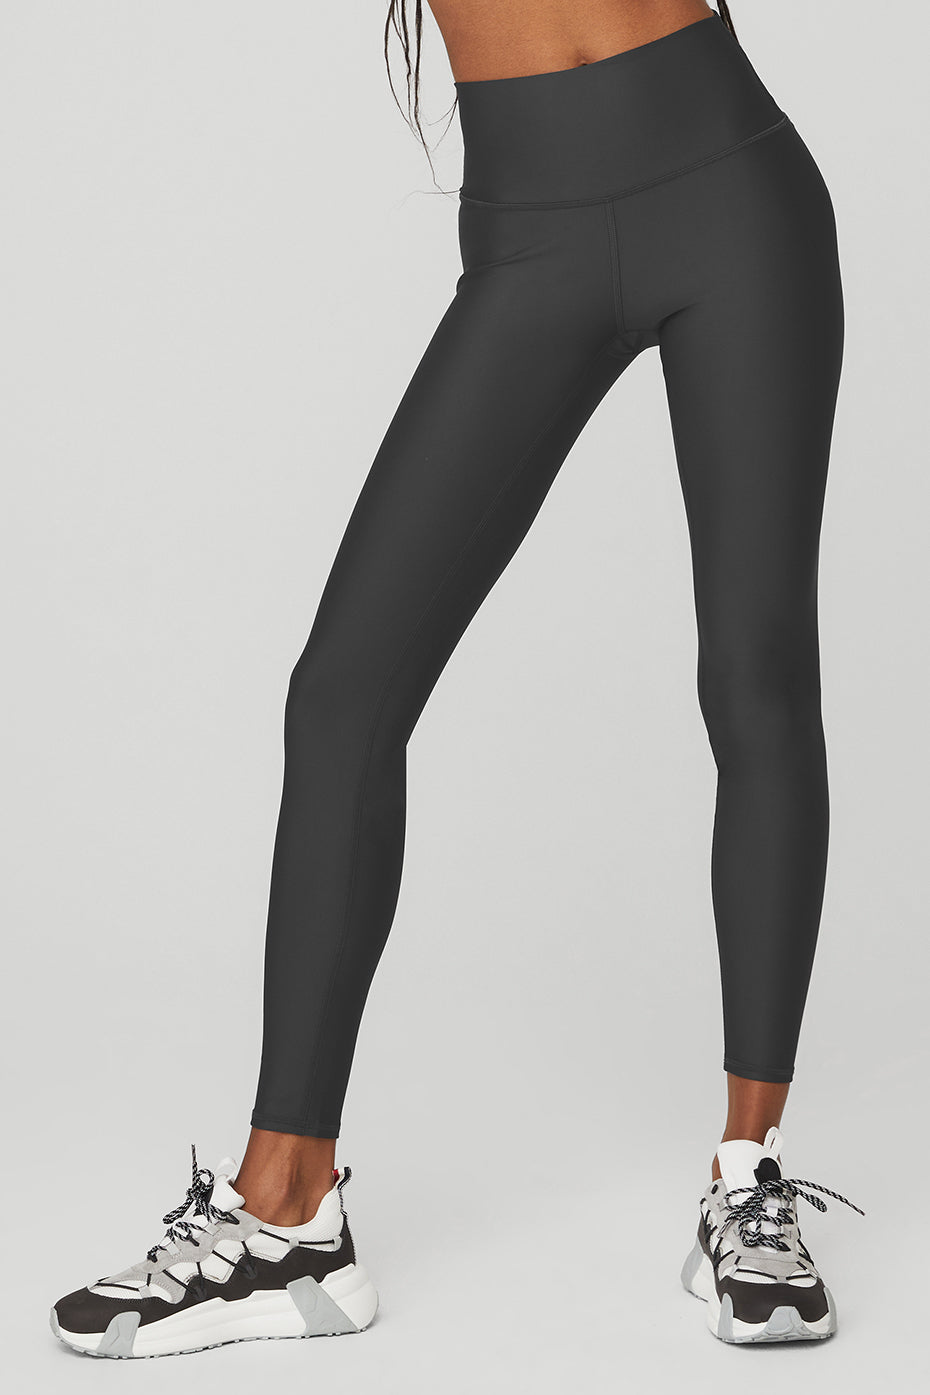 Ailan Chinlon Nylon Yoga Pant Elastic Sweat-Absorbent Bodylift Deep Squat Workout  Leggings Tights Clothing, Black, L : : Fashion